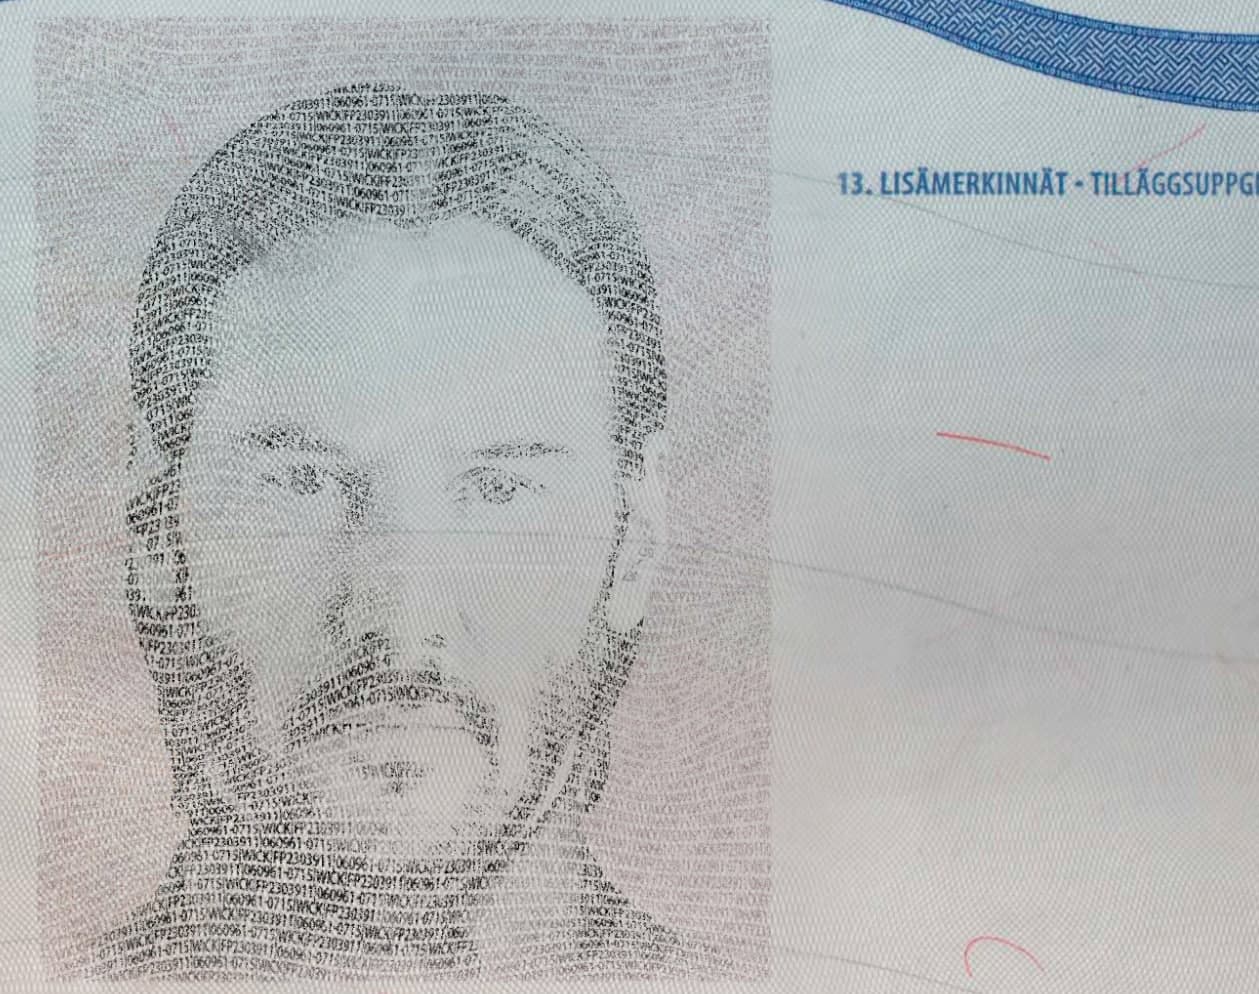 Finland Passport-3